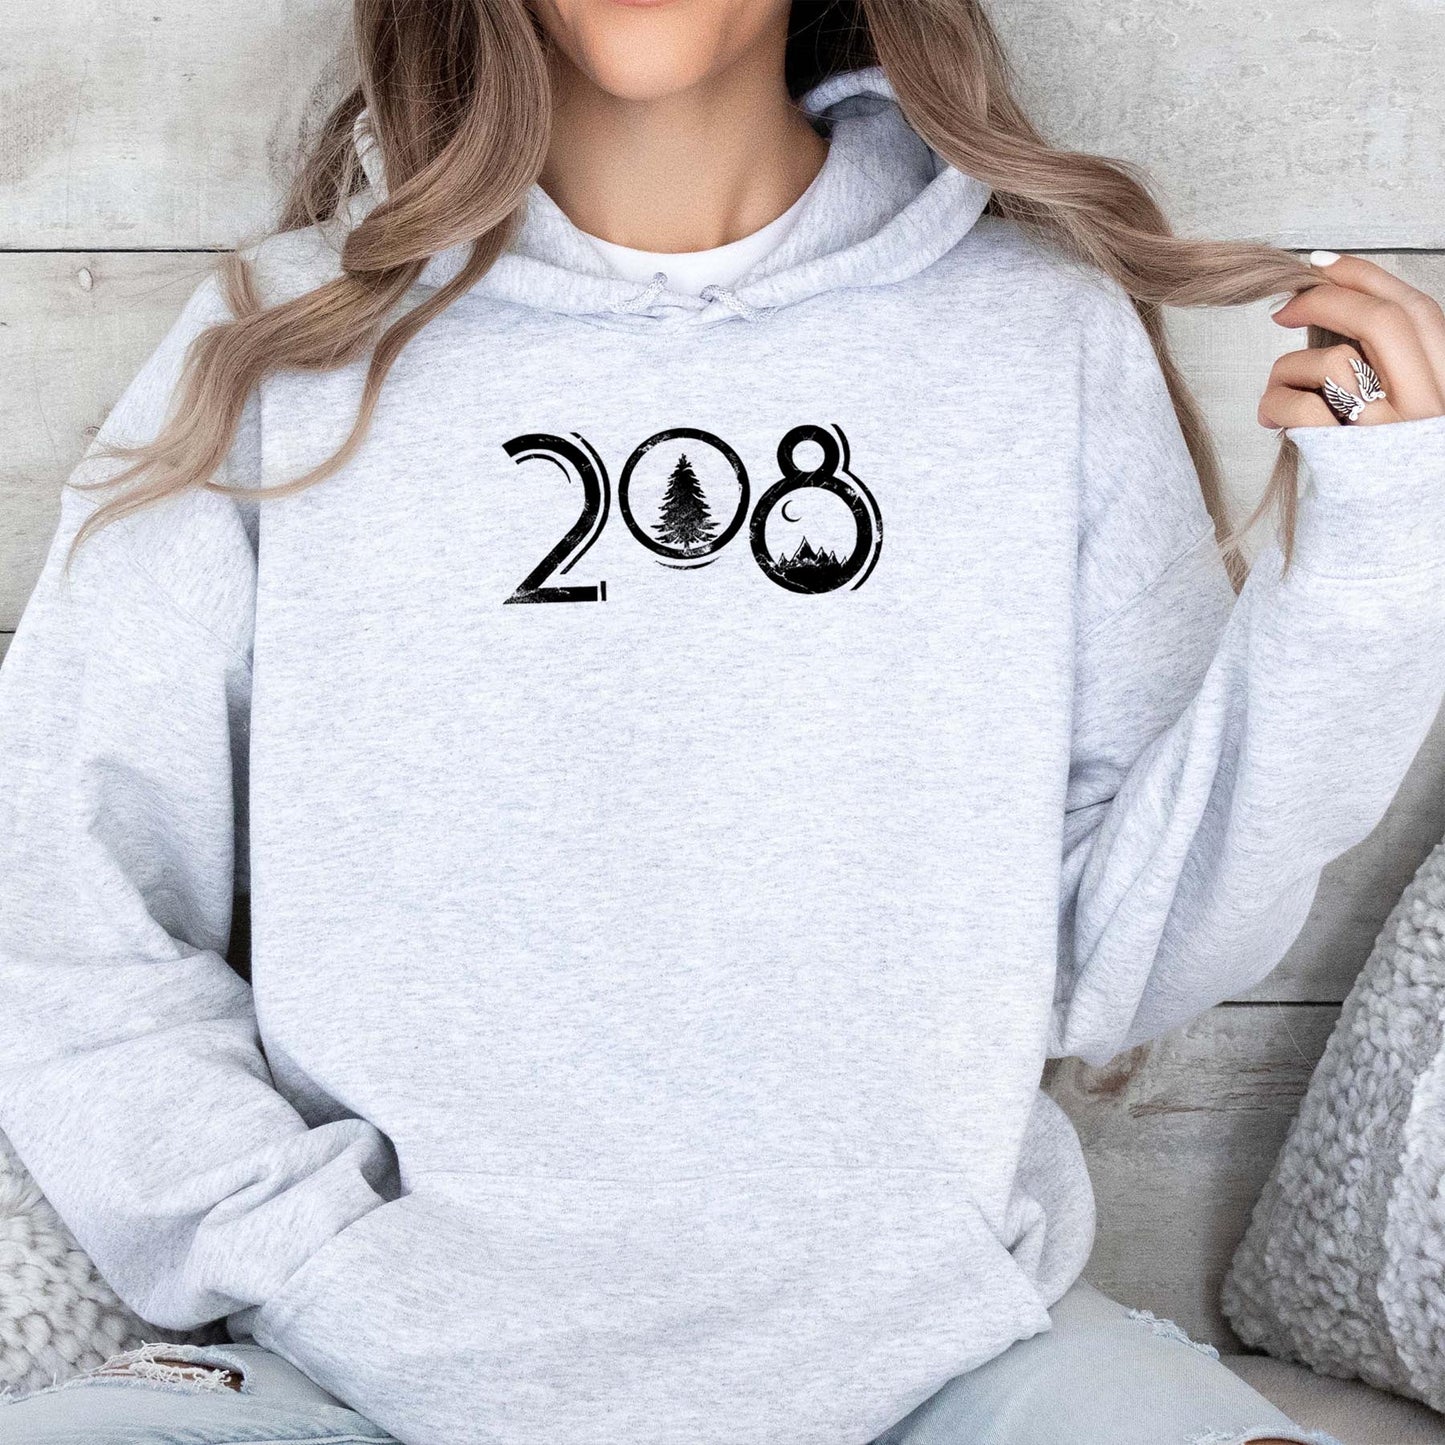 208 Sweatshirts